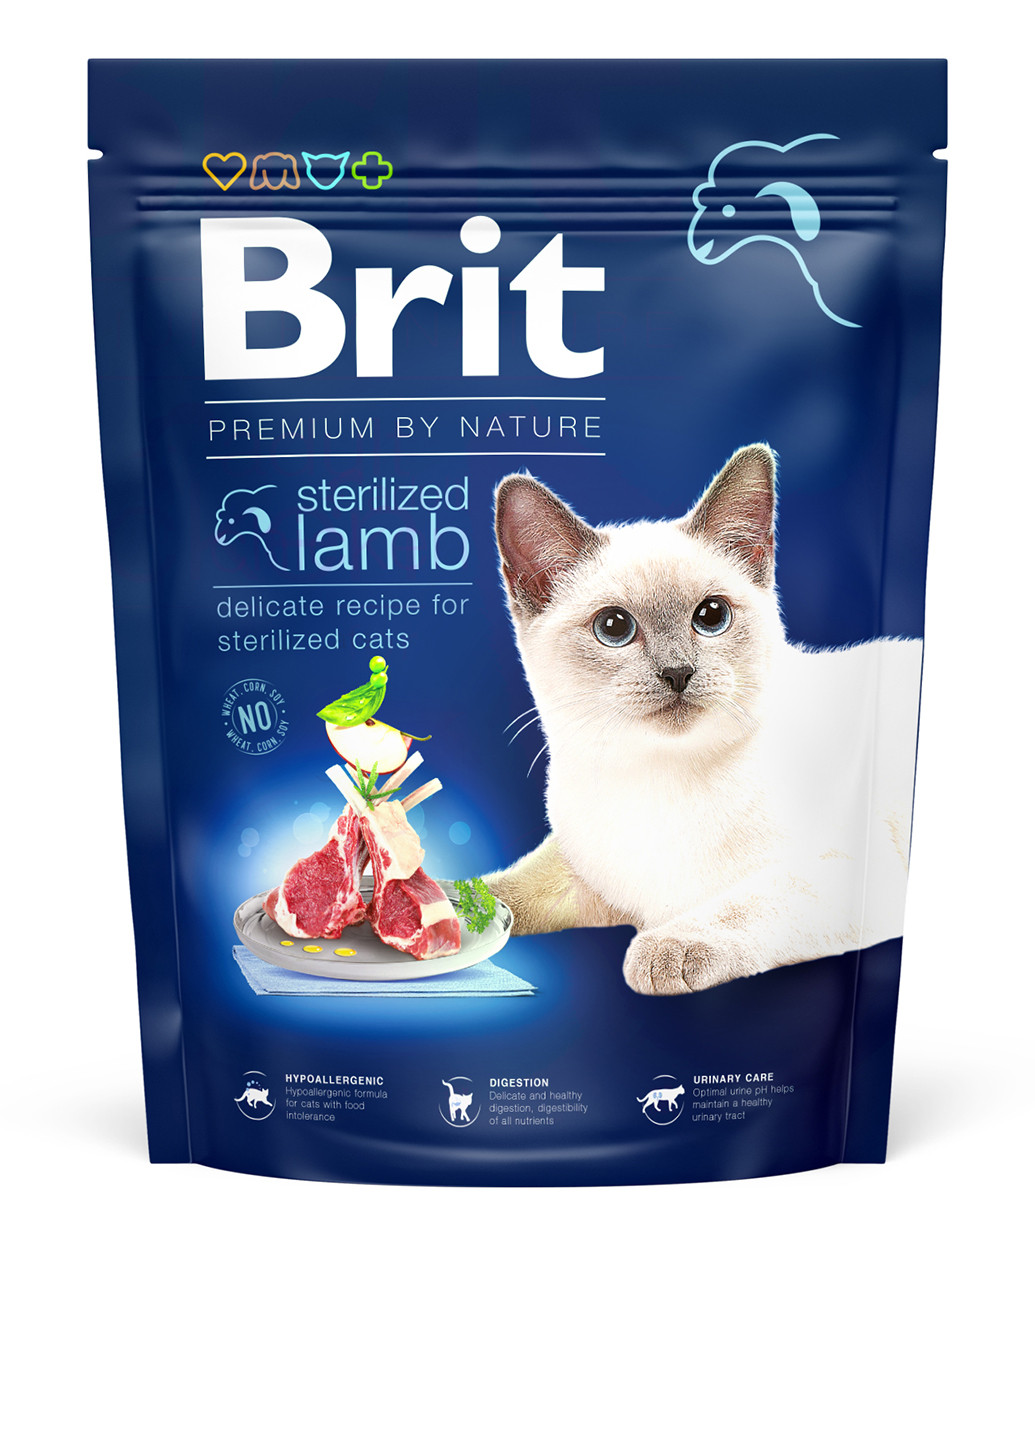 Сухой корм Cat Sterilized Lamb с ягненком, 300 г Brit Premium (252461498)